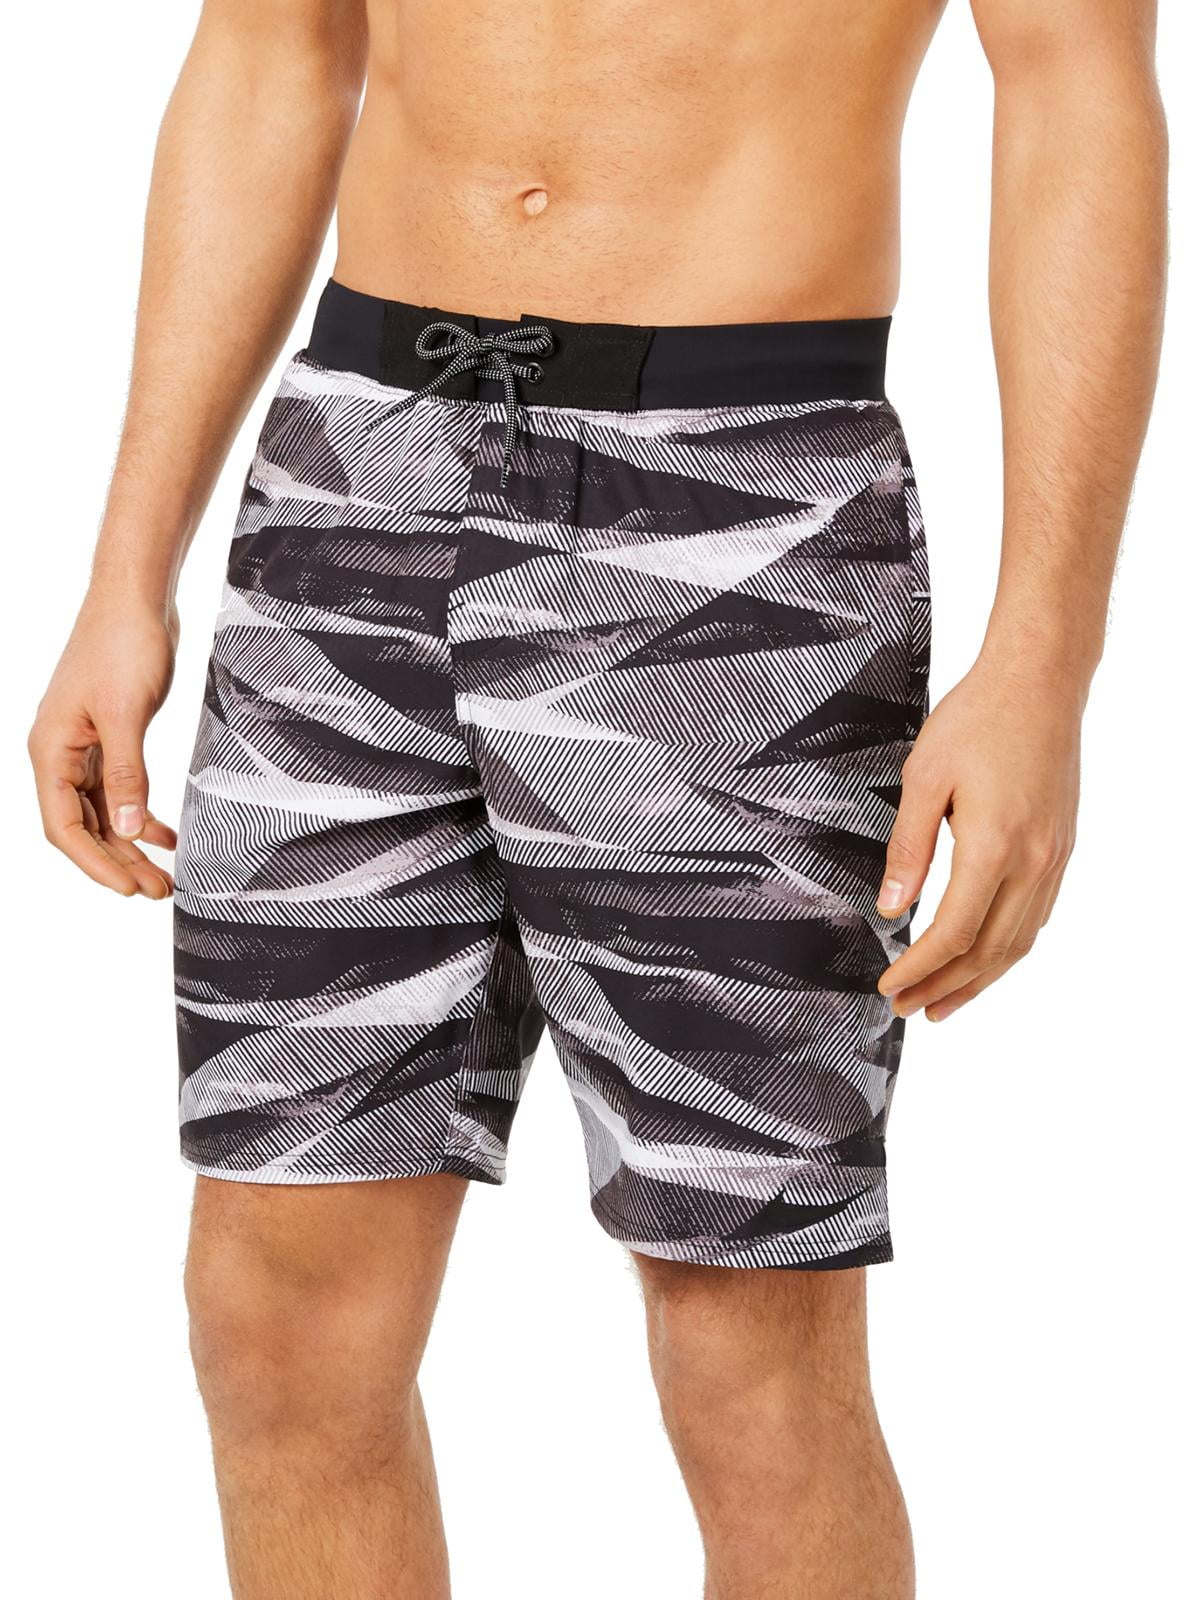 Nike Mens Printed Beachwear Swim Trunks - Walmart.com